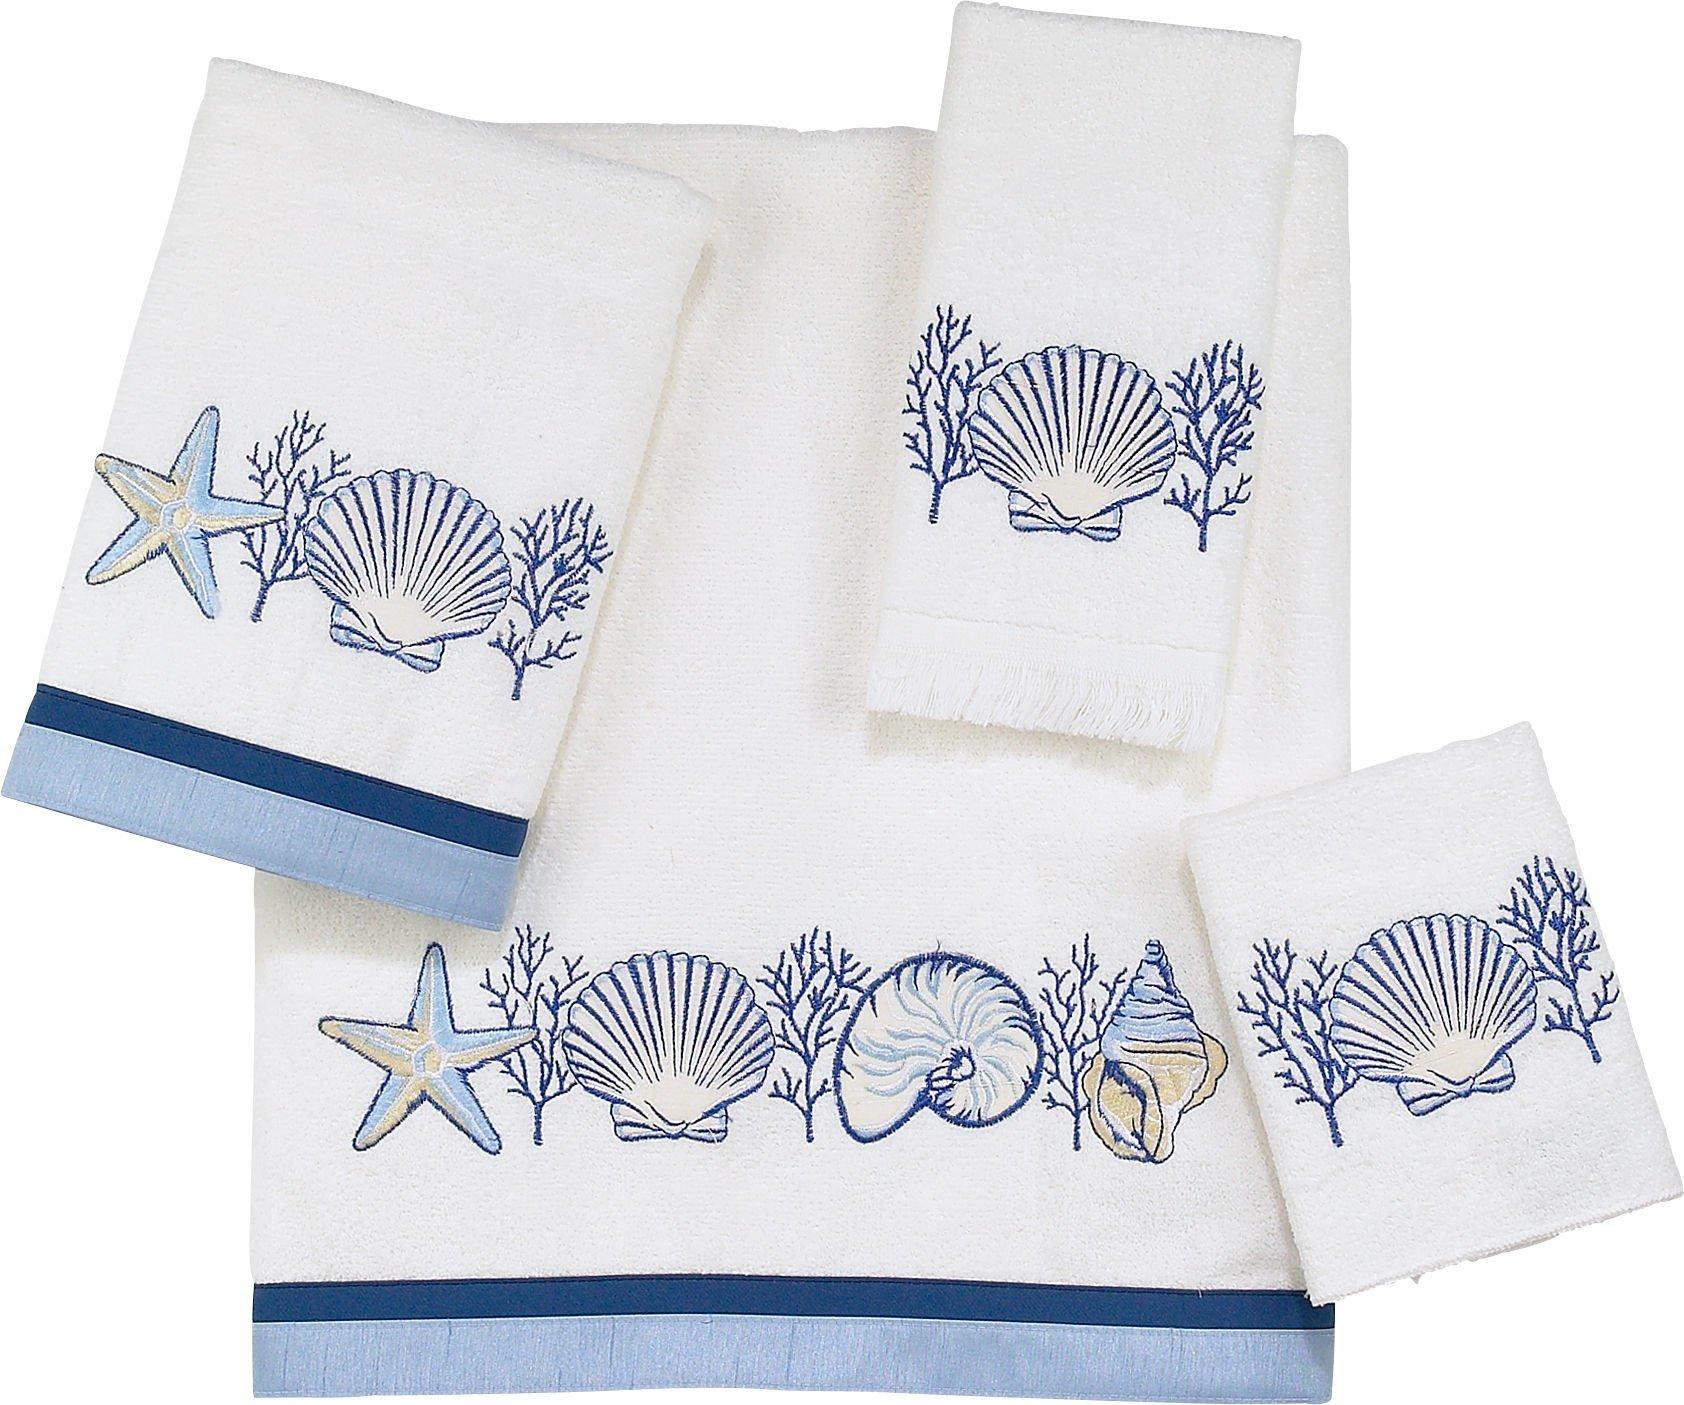 Nassau Towel Collection